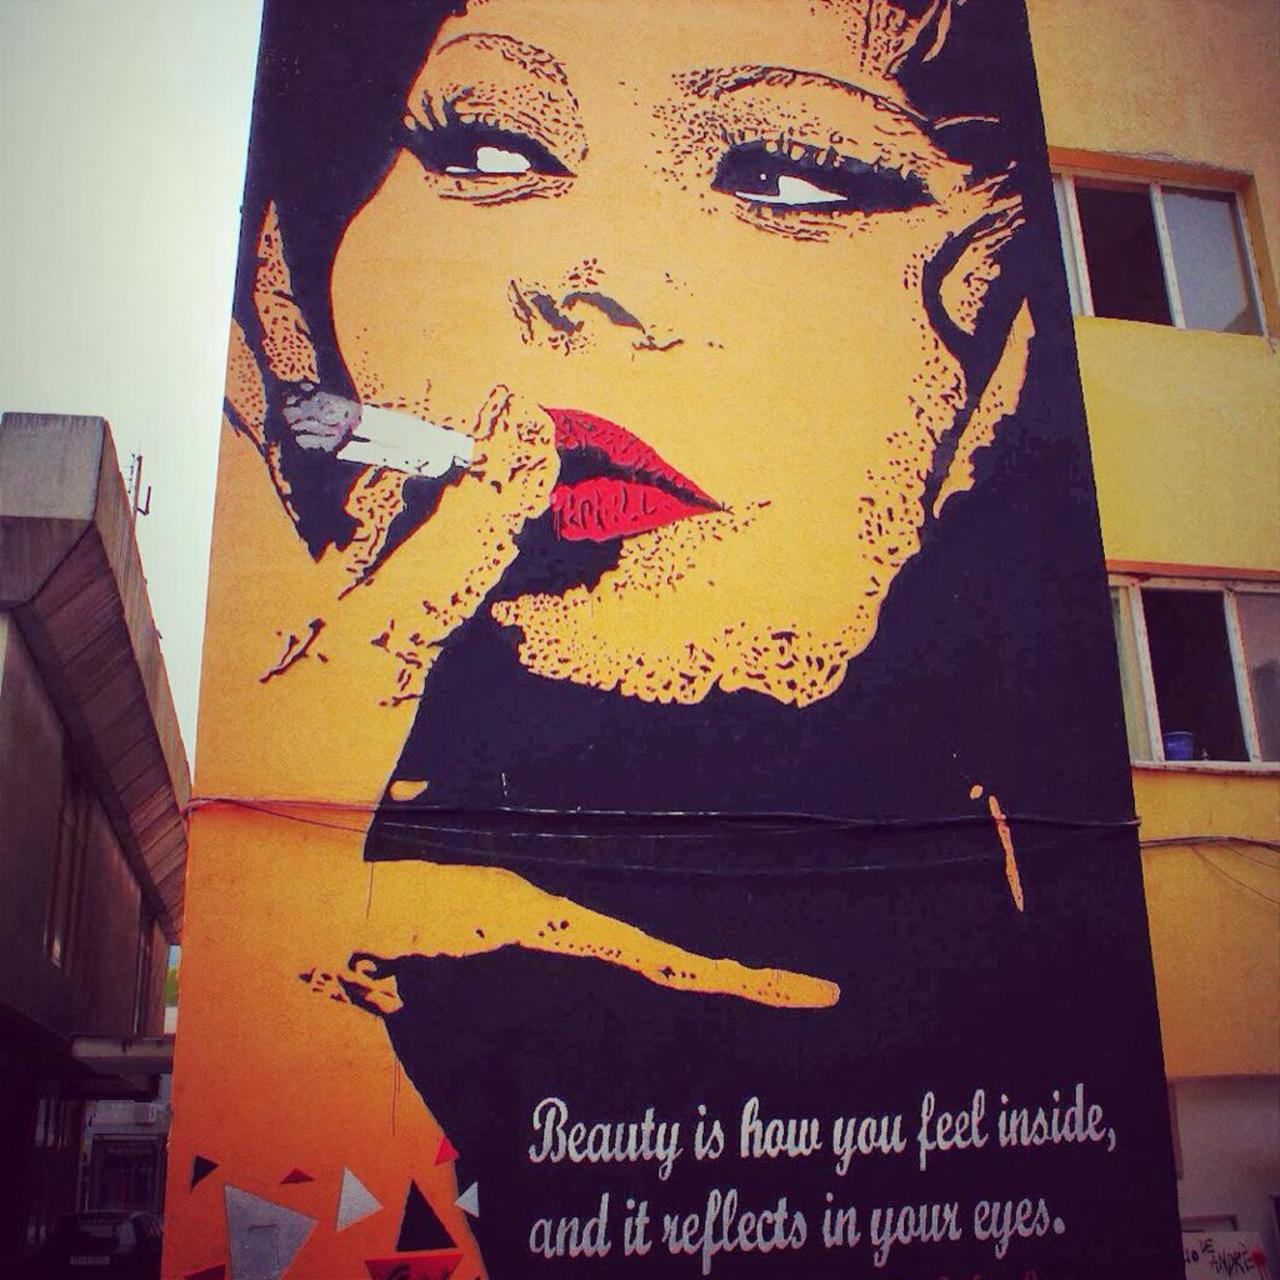 Cekos'art #sprayart #Stencil #sticker #streetart #graffiti #urbanart #murales #mural http://t.co/BKdrgjGopb